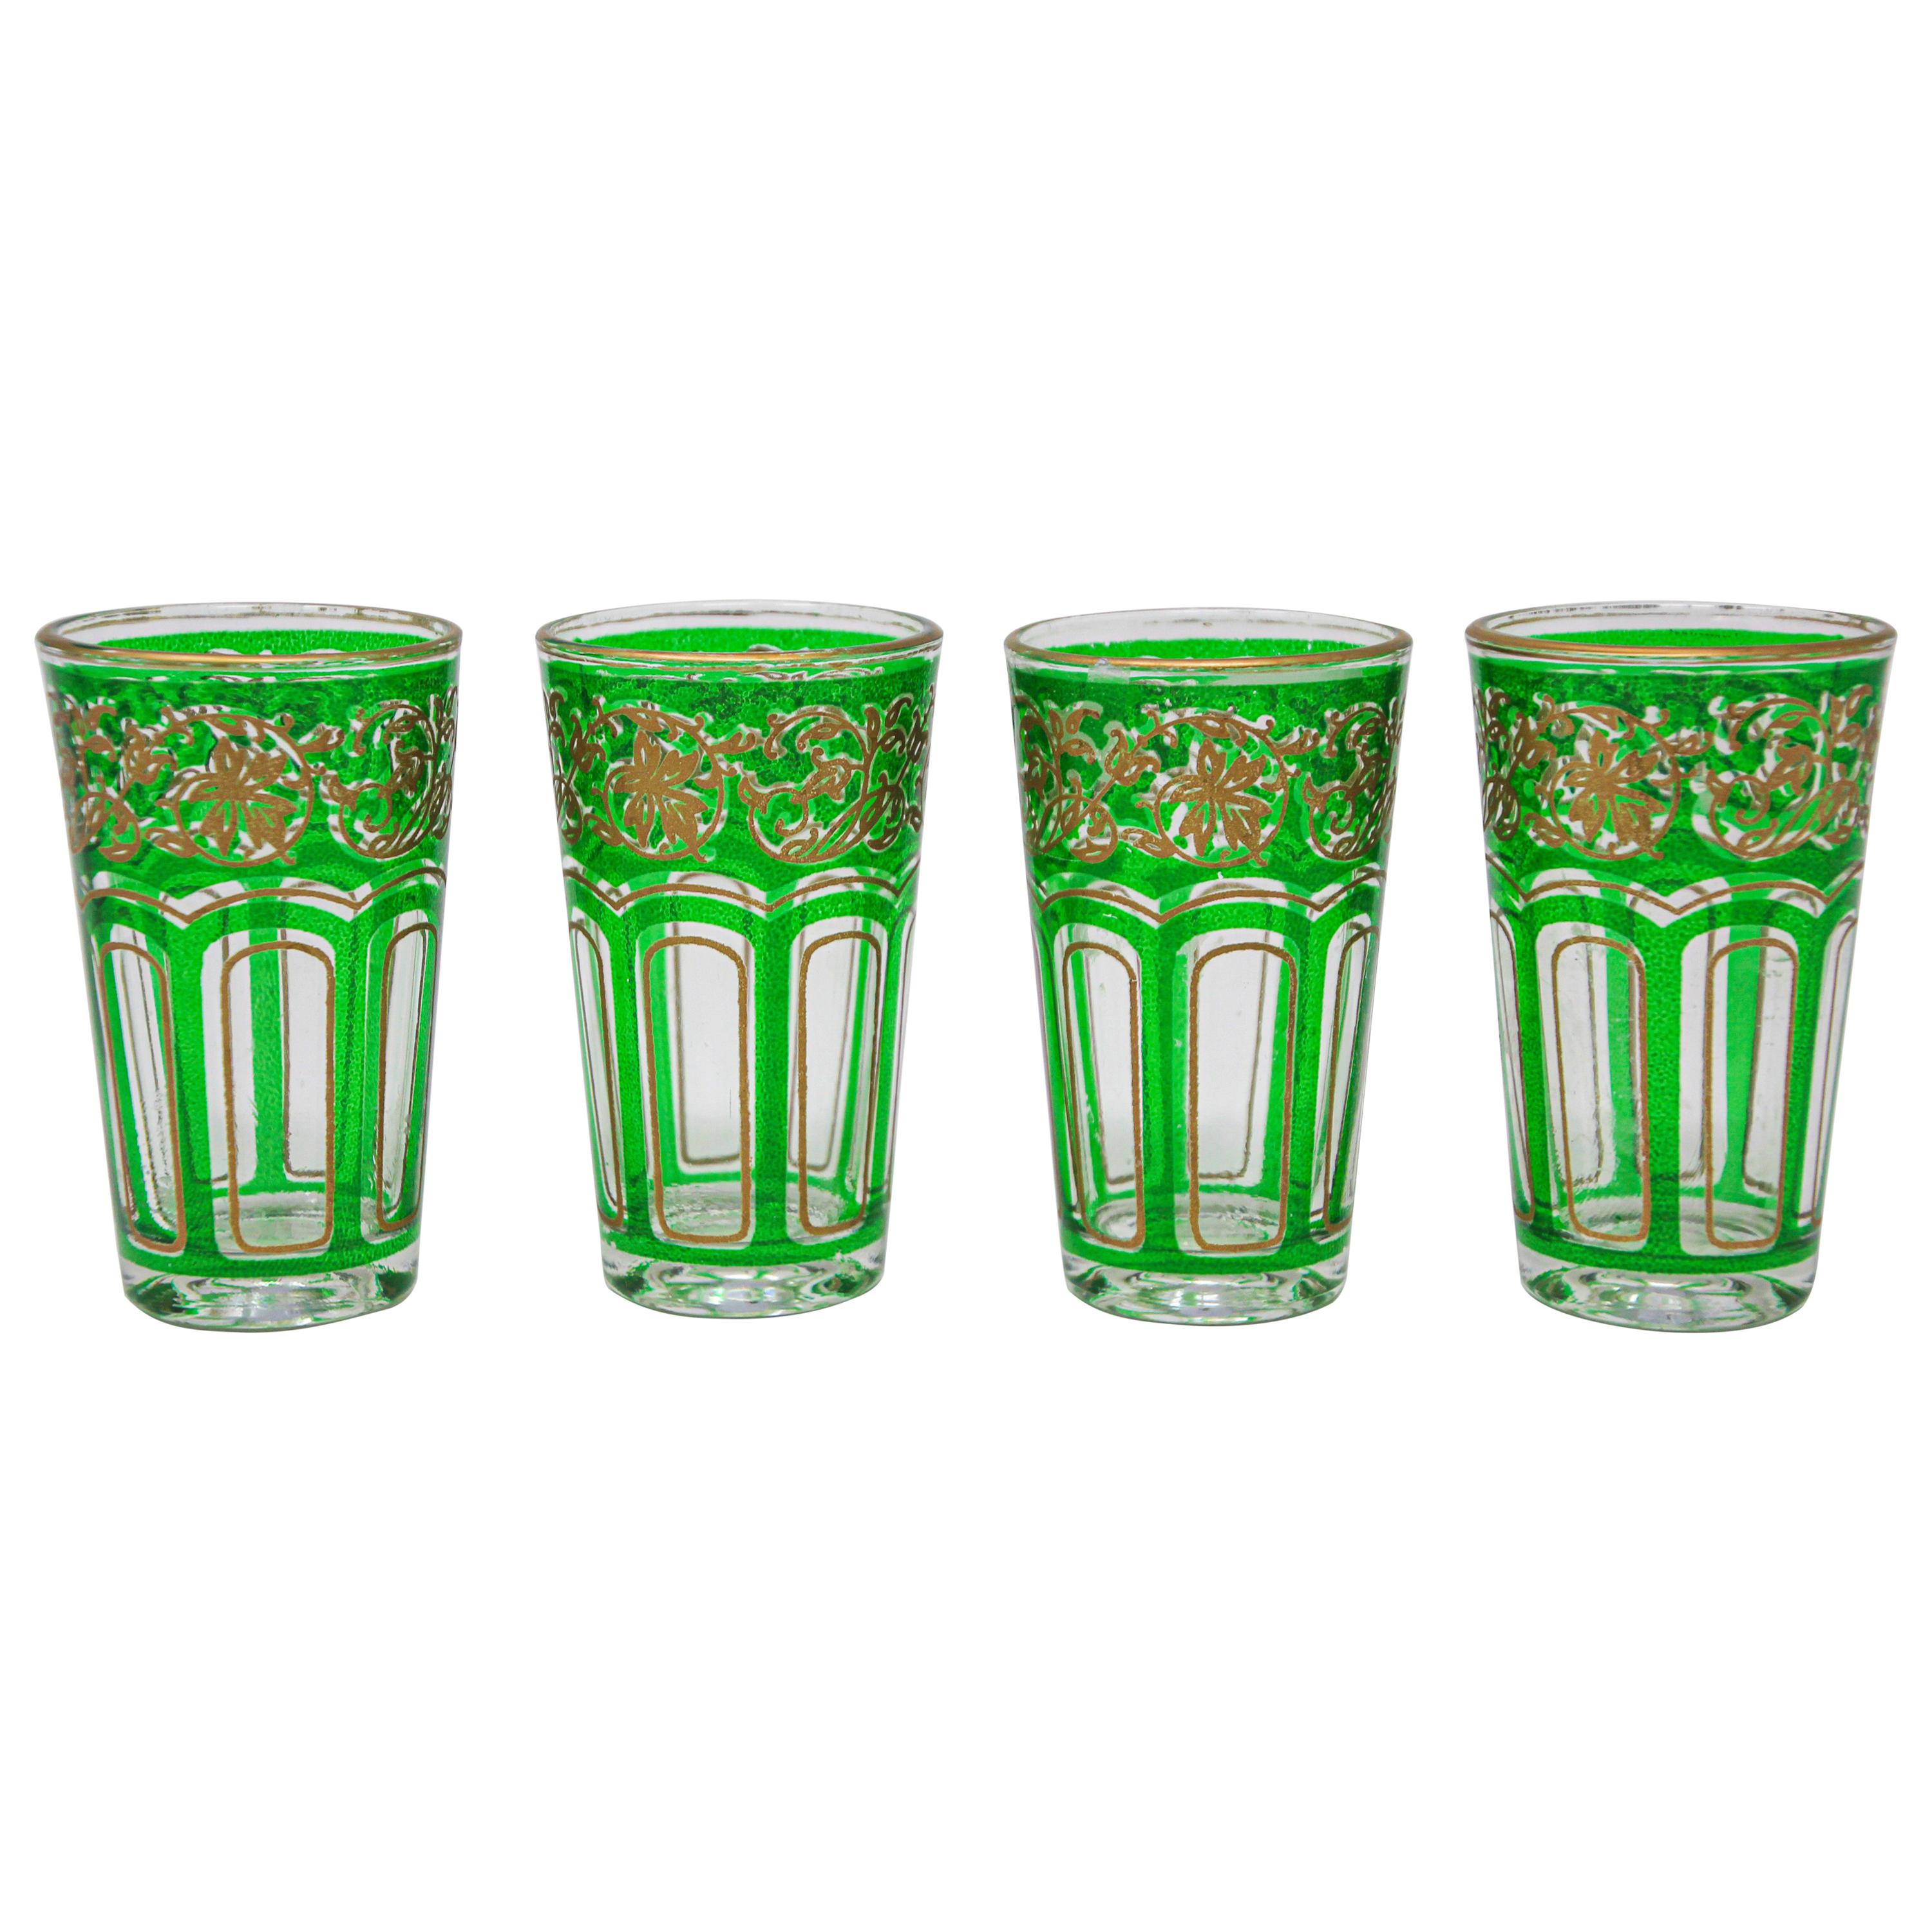 Set of Four Green Glasses with Gold Raised Moorish Design